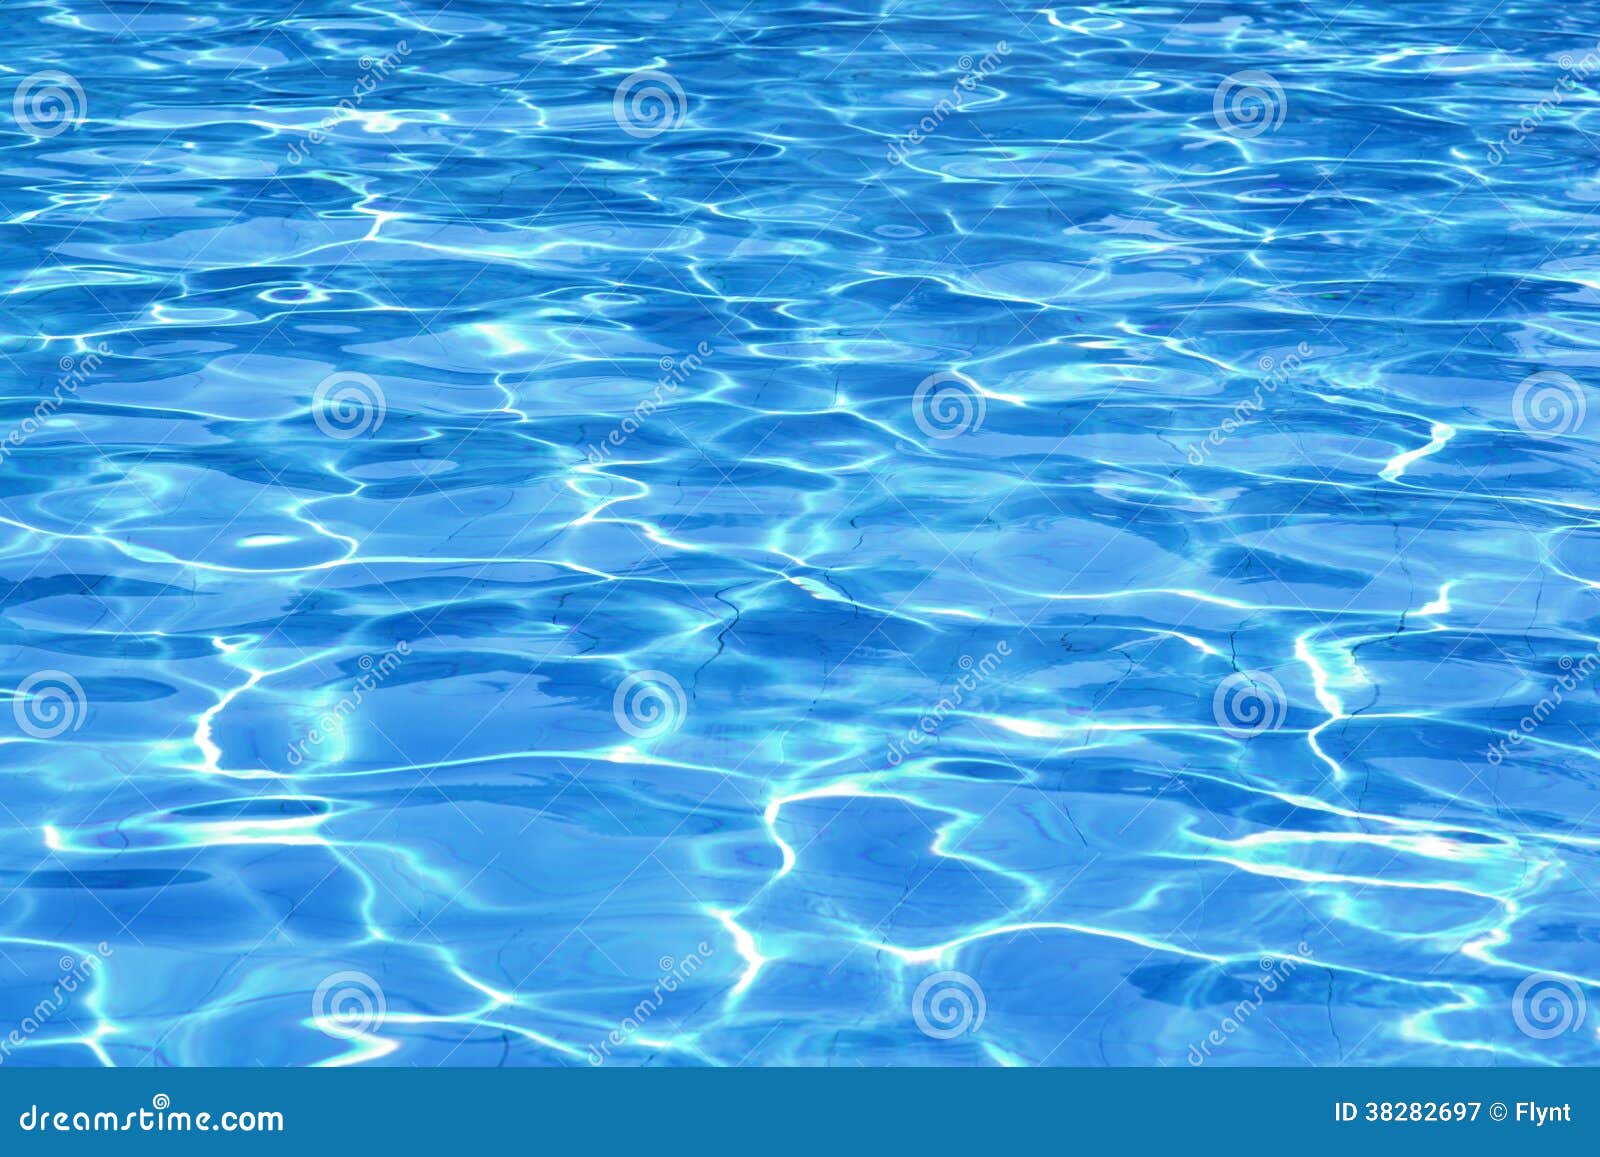 swimming pool water surface